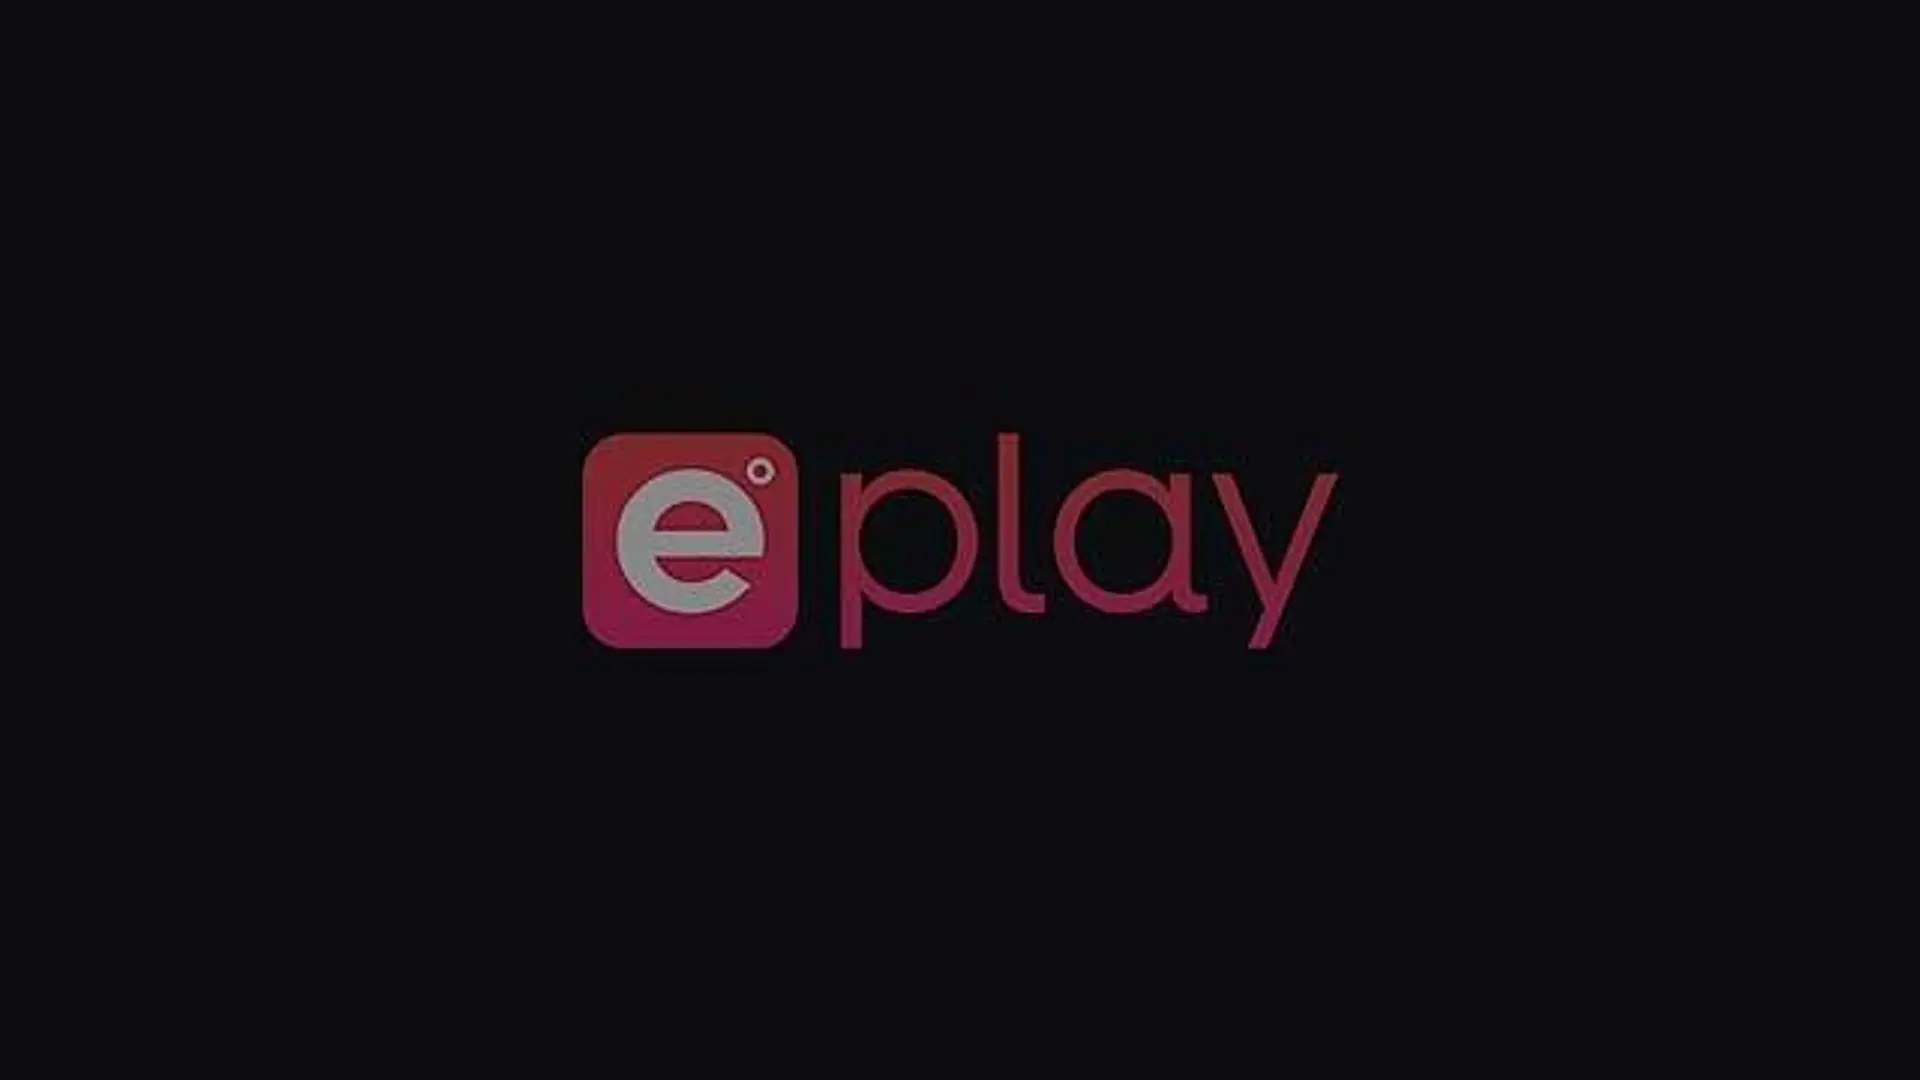 chefchrispbacon's ePlay Channel